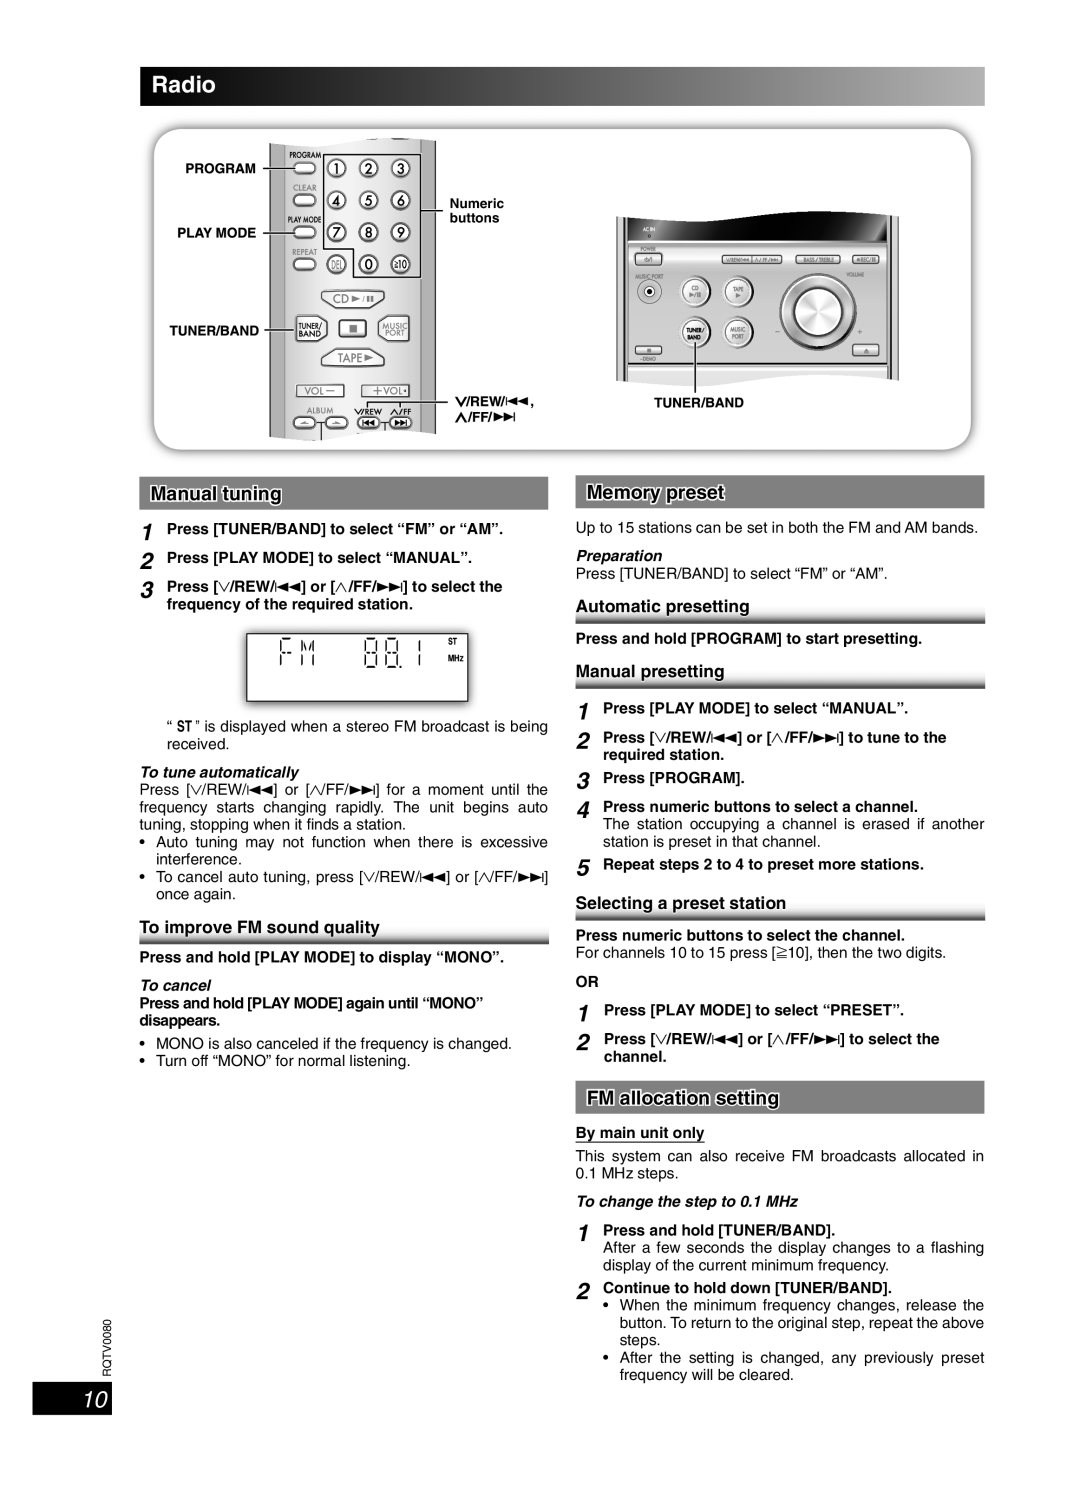 Panasonic SC-PM23 Radio, Manual tuning, Memory preset, FM allocation setting, To improve FM sound quality, To cancel 